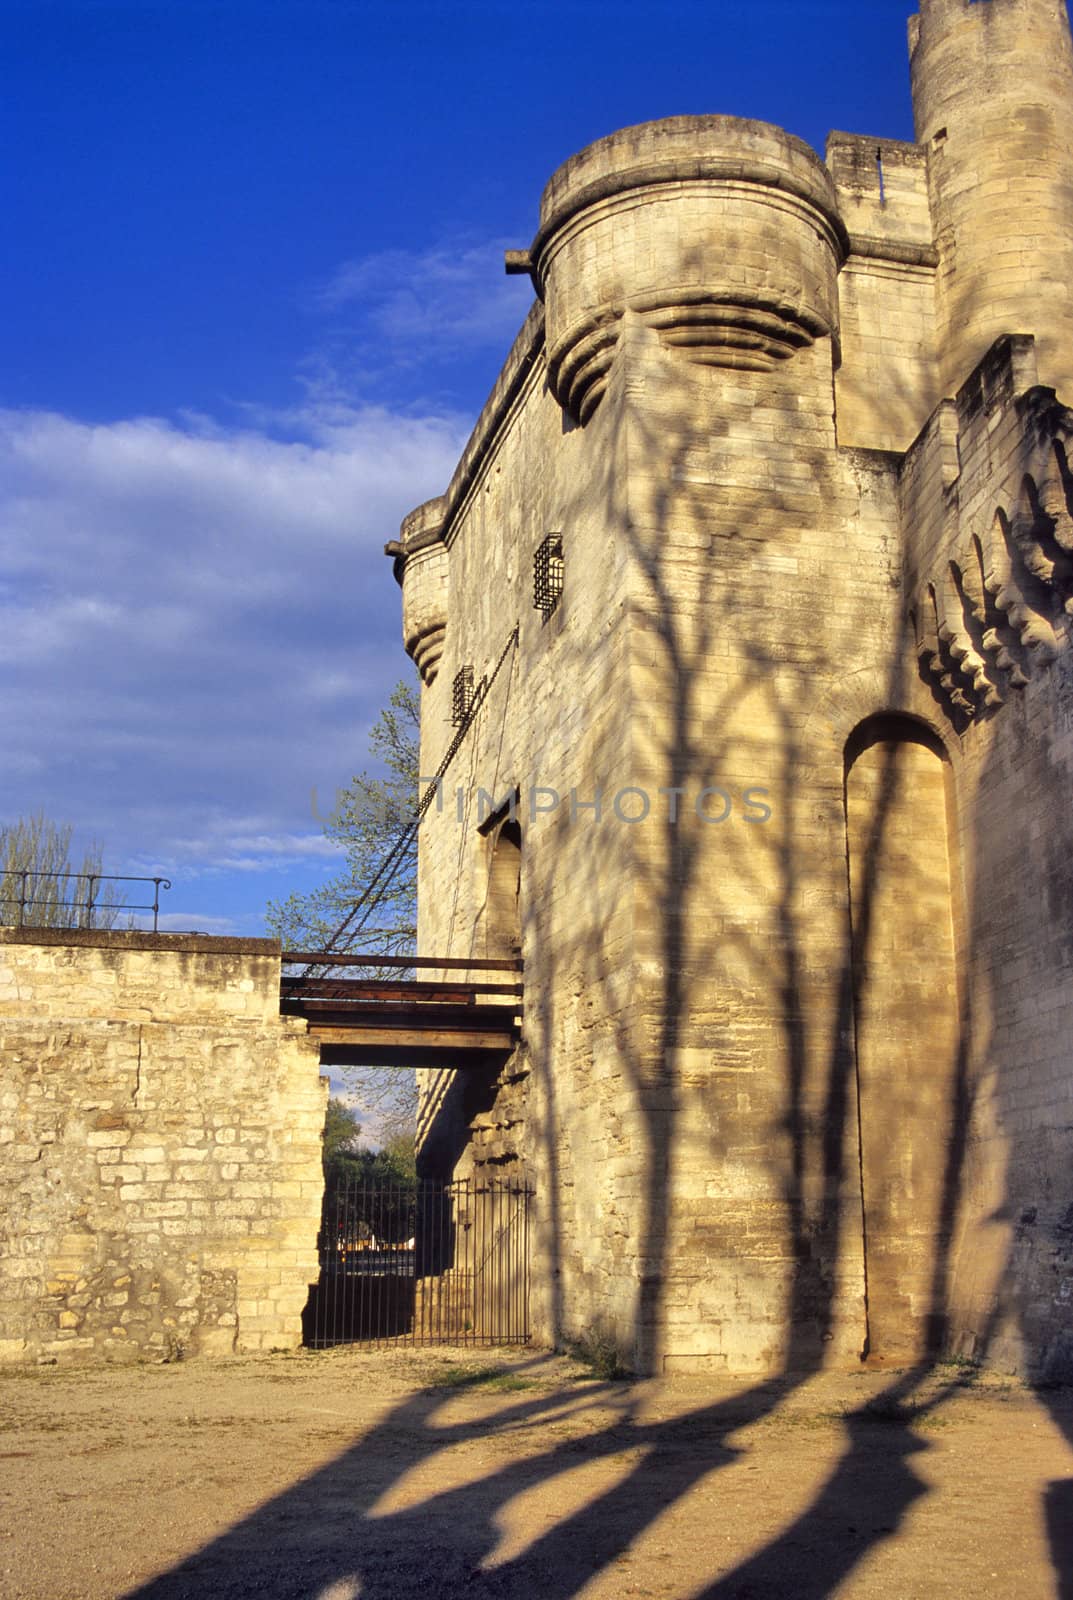 The draw bridge of the ancient Avignon city walls that lead to the famous bridge.